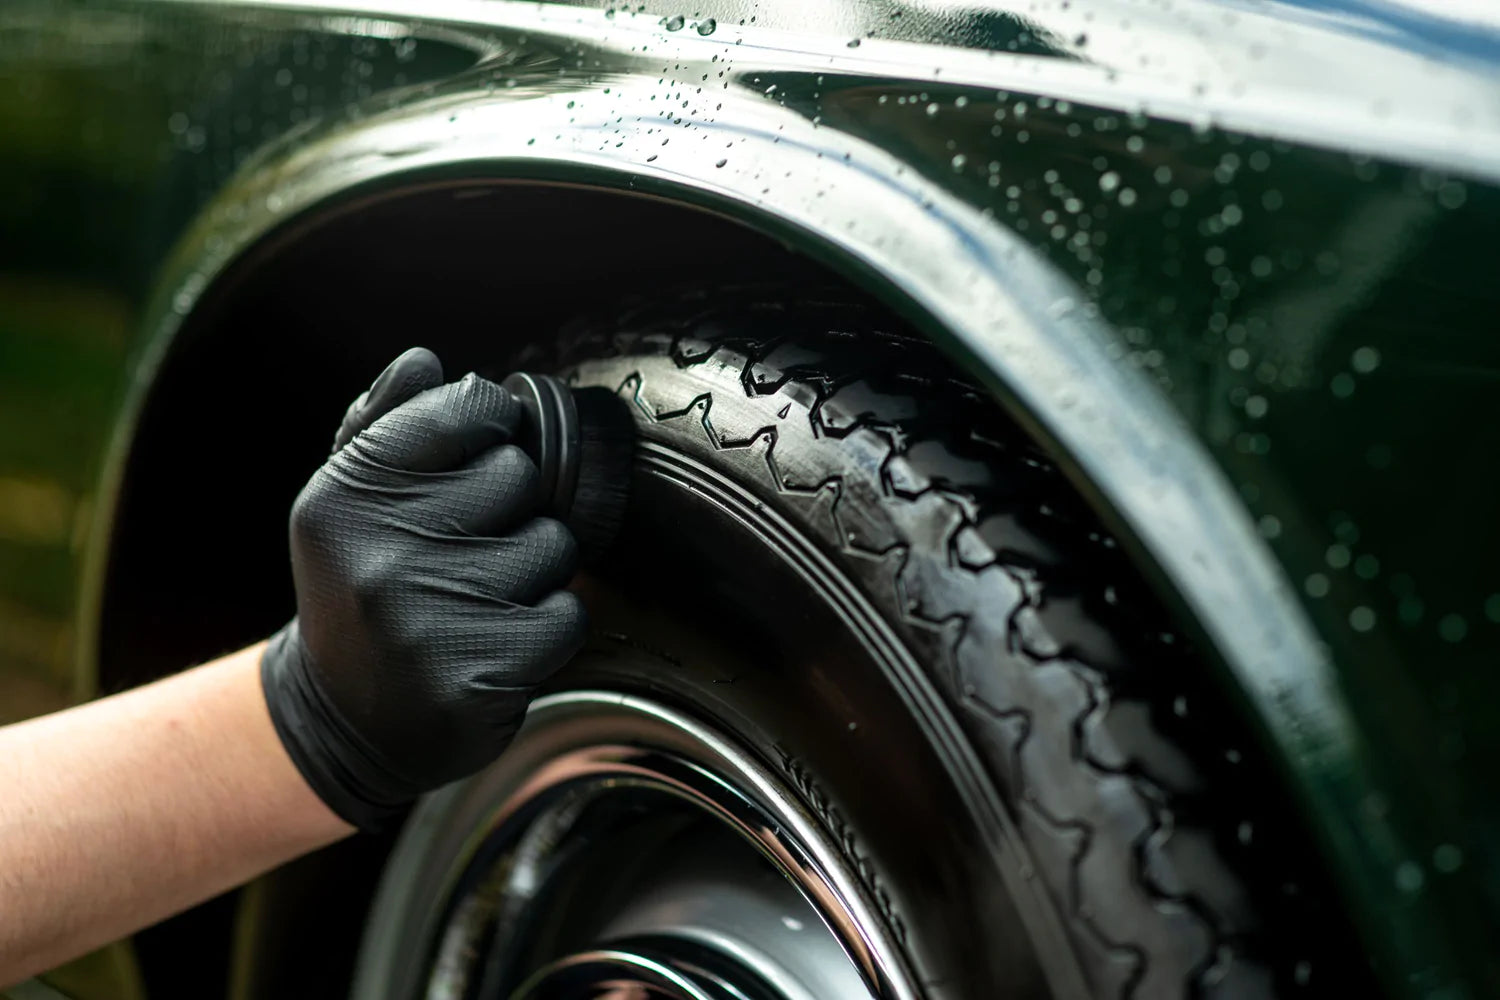 CARSCOPE UK Tire Dressing Brush | Tire Shine Applicator - Parks Car Care 